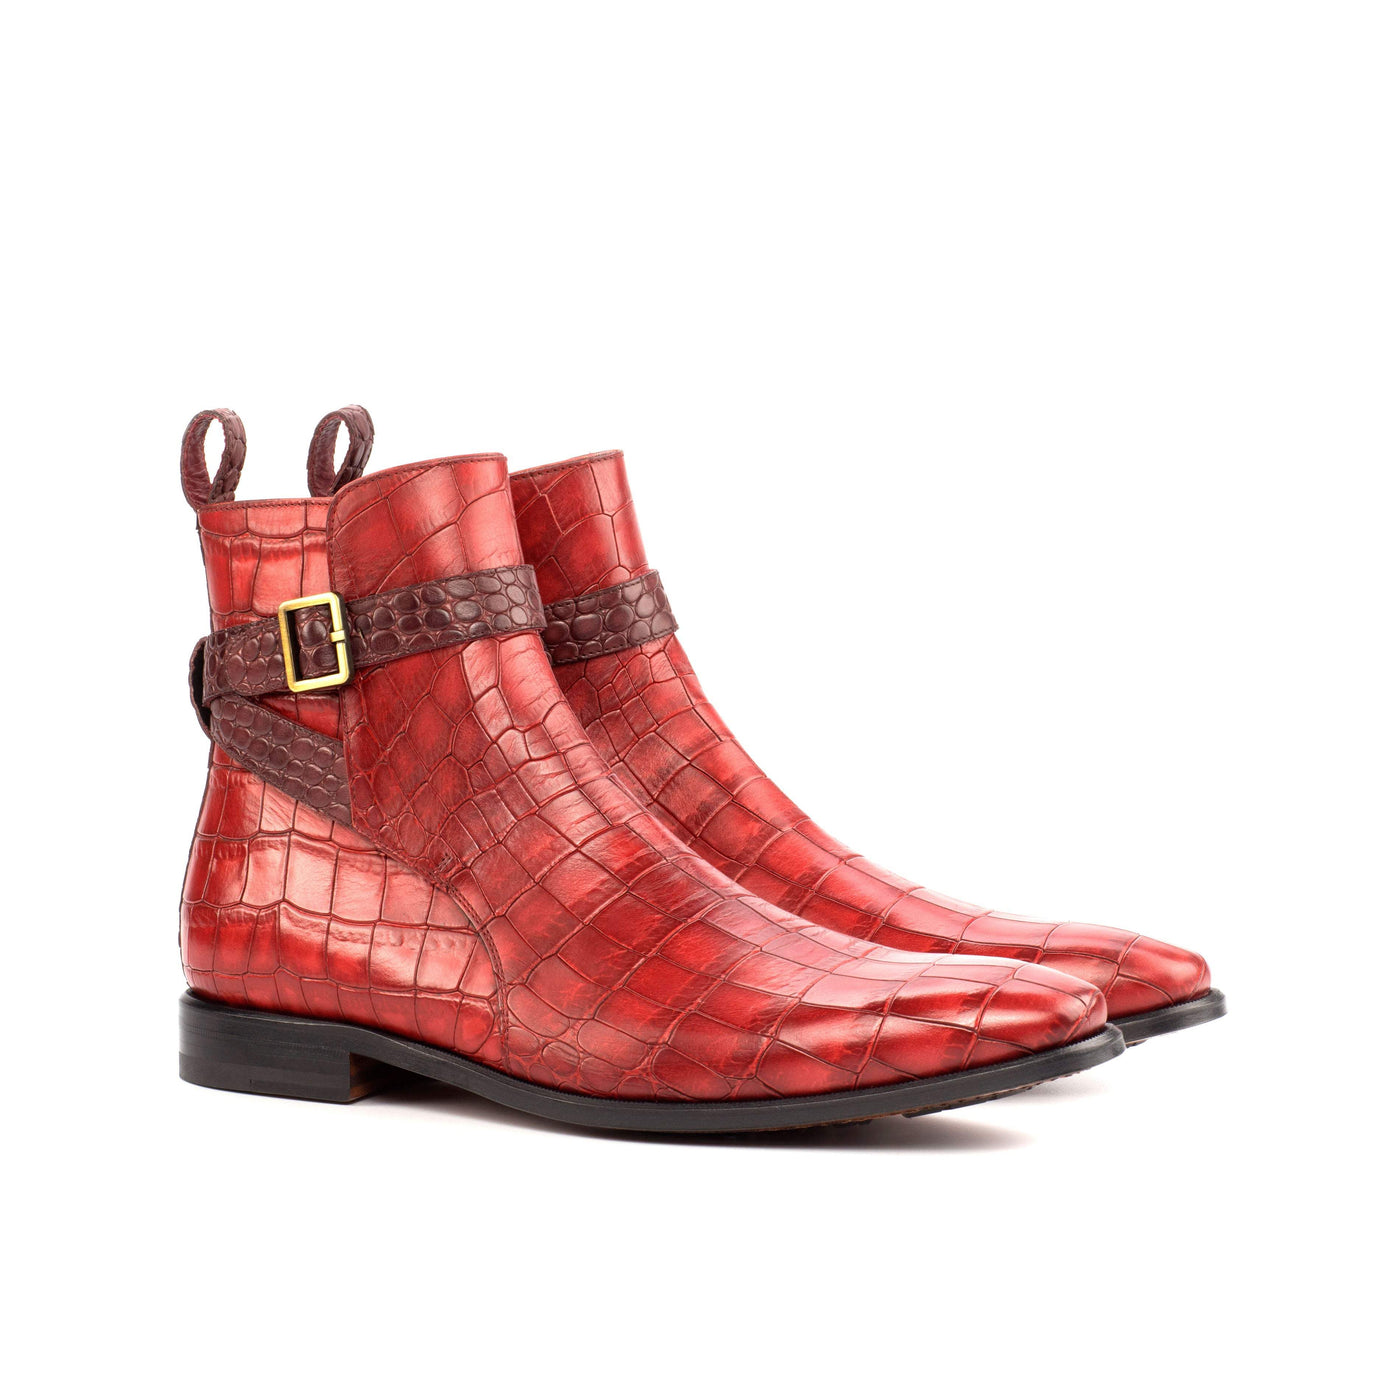 Men's Jodhpur Boots Leather Burgundy Red 4493 3- MERRIMIUM